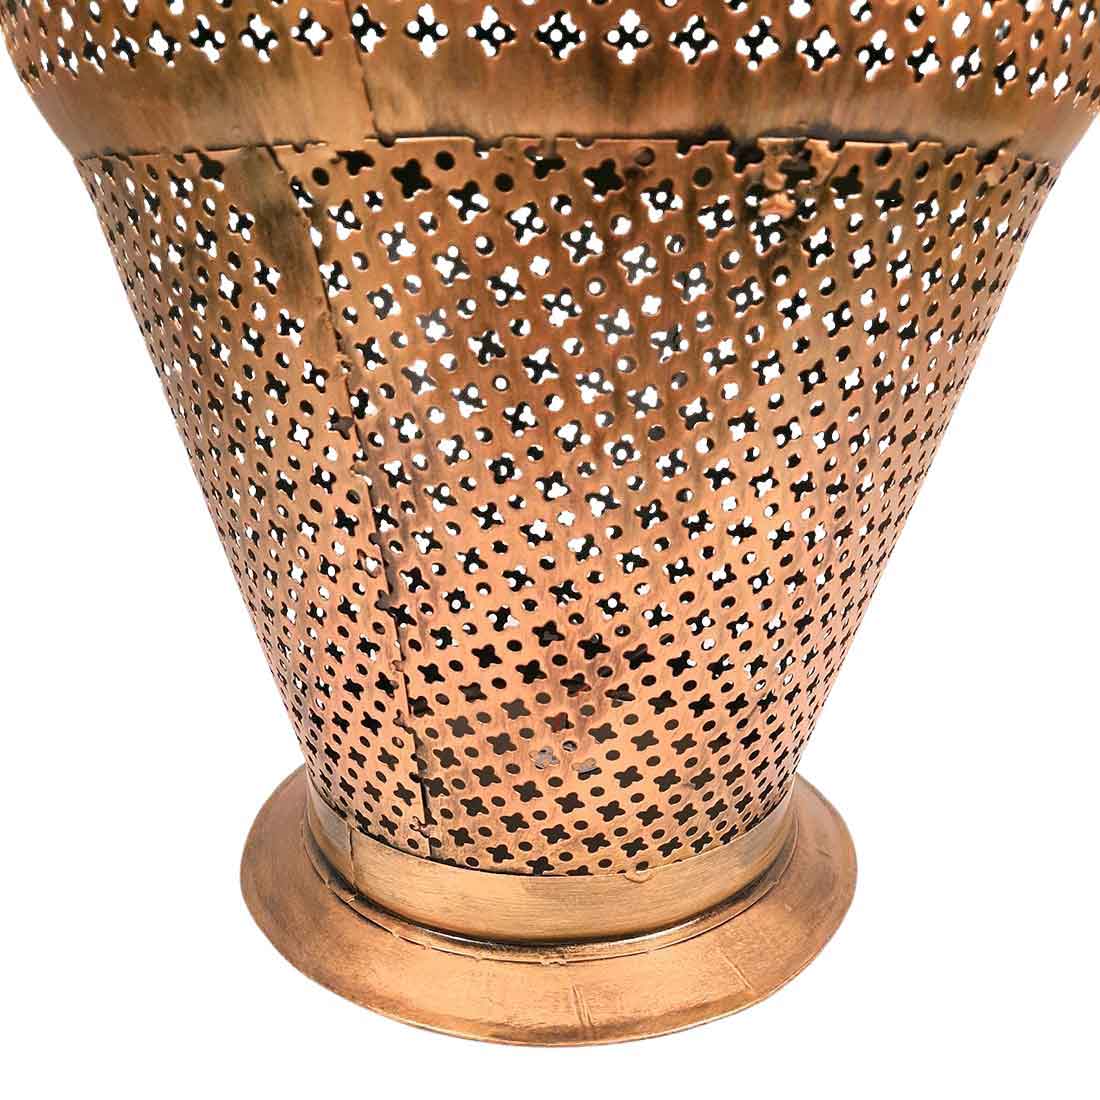 Vase with LED Lights | LED Lamp Showpiece - for Living Room & Gifts - 23 Inch